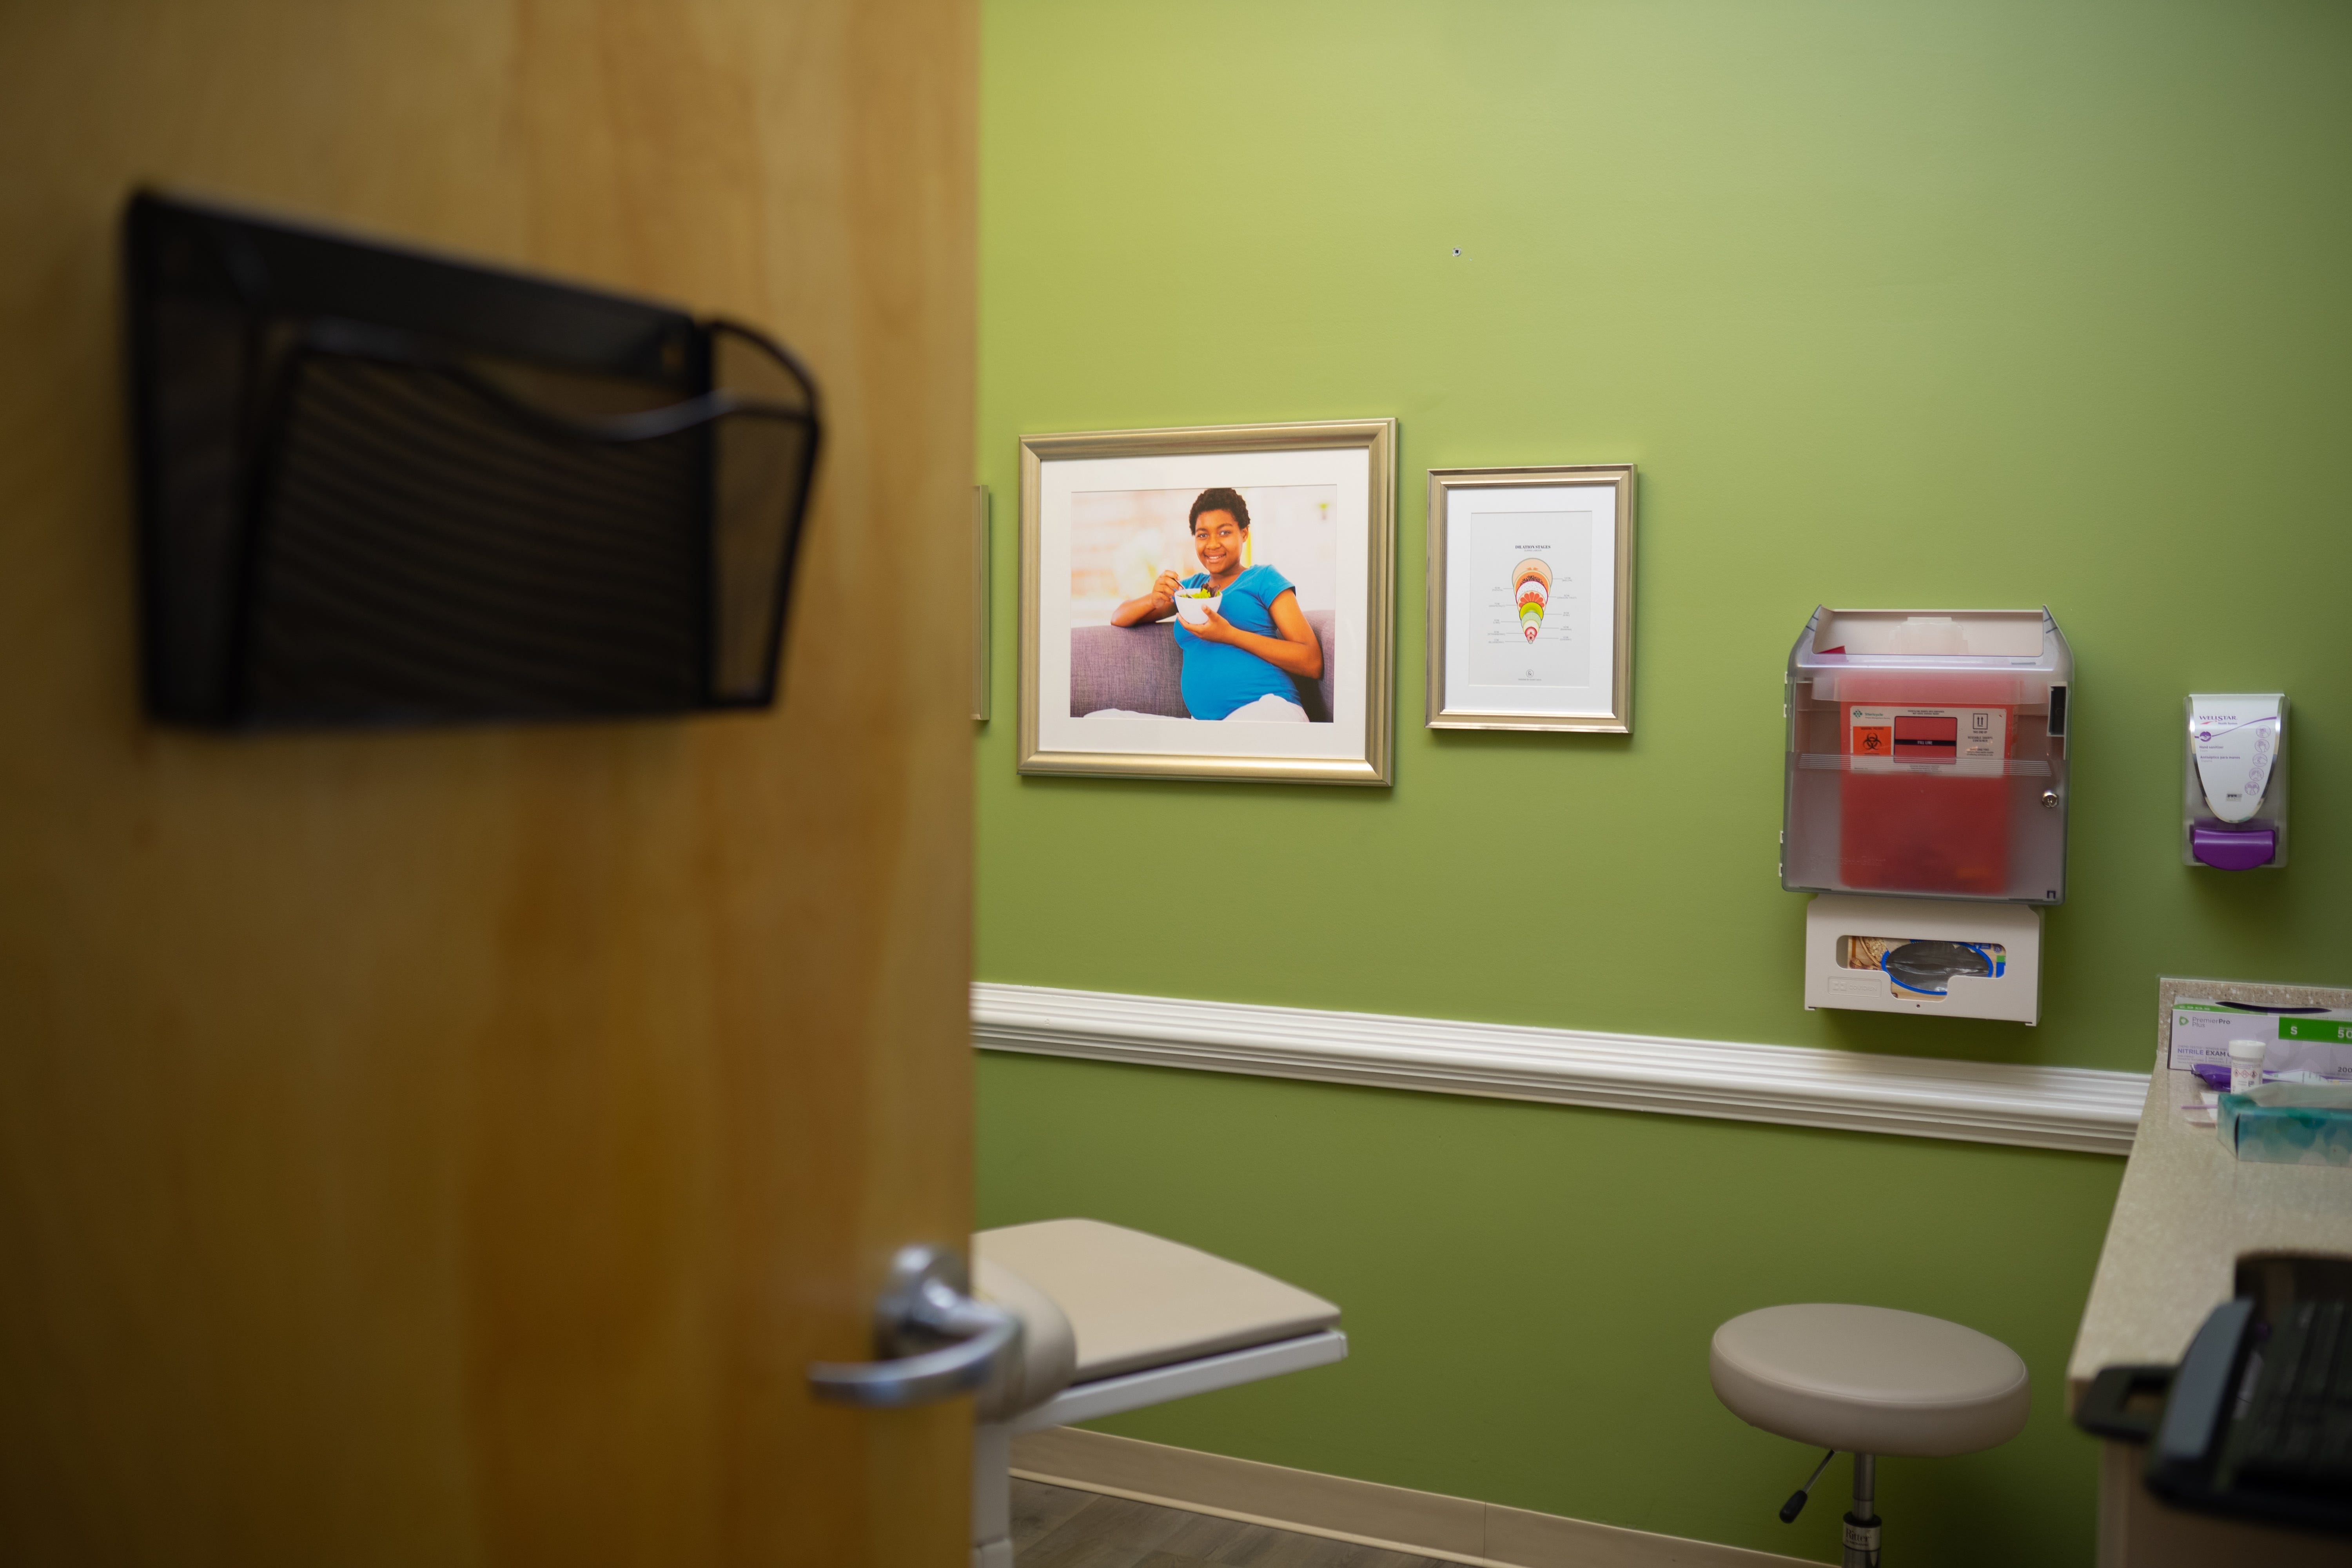 Obstetrician-gynecologist Dr. Lethenia Joy Baker’s clinic in LaGrange, Ga. on July 13, 2022.